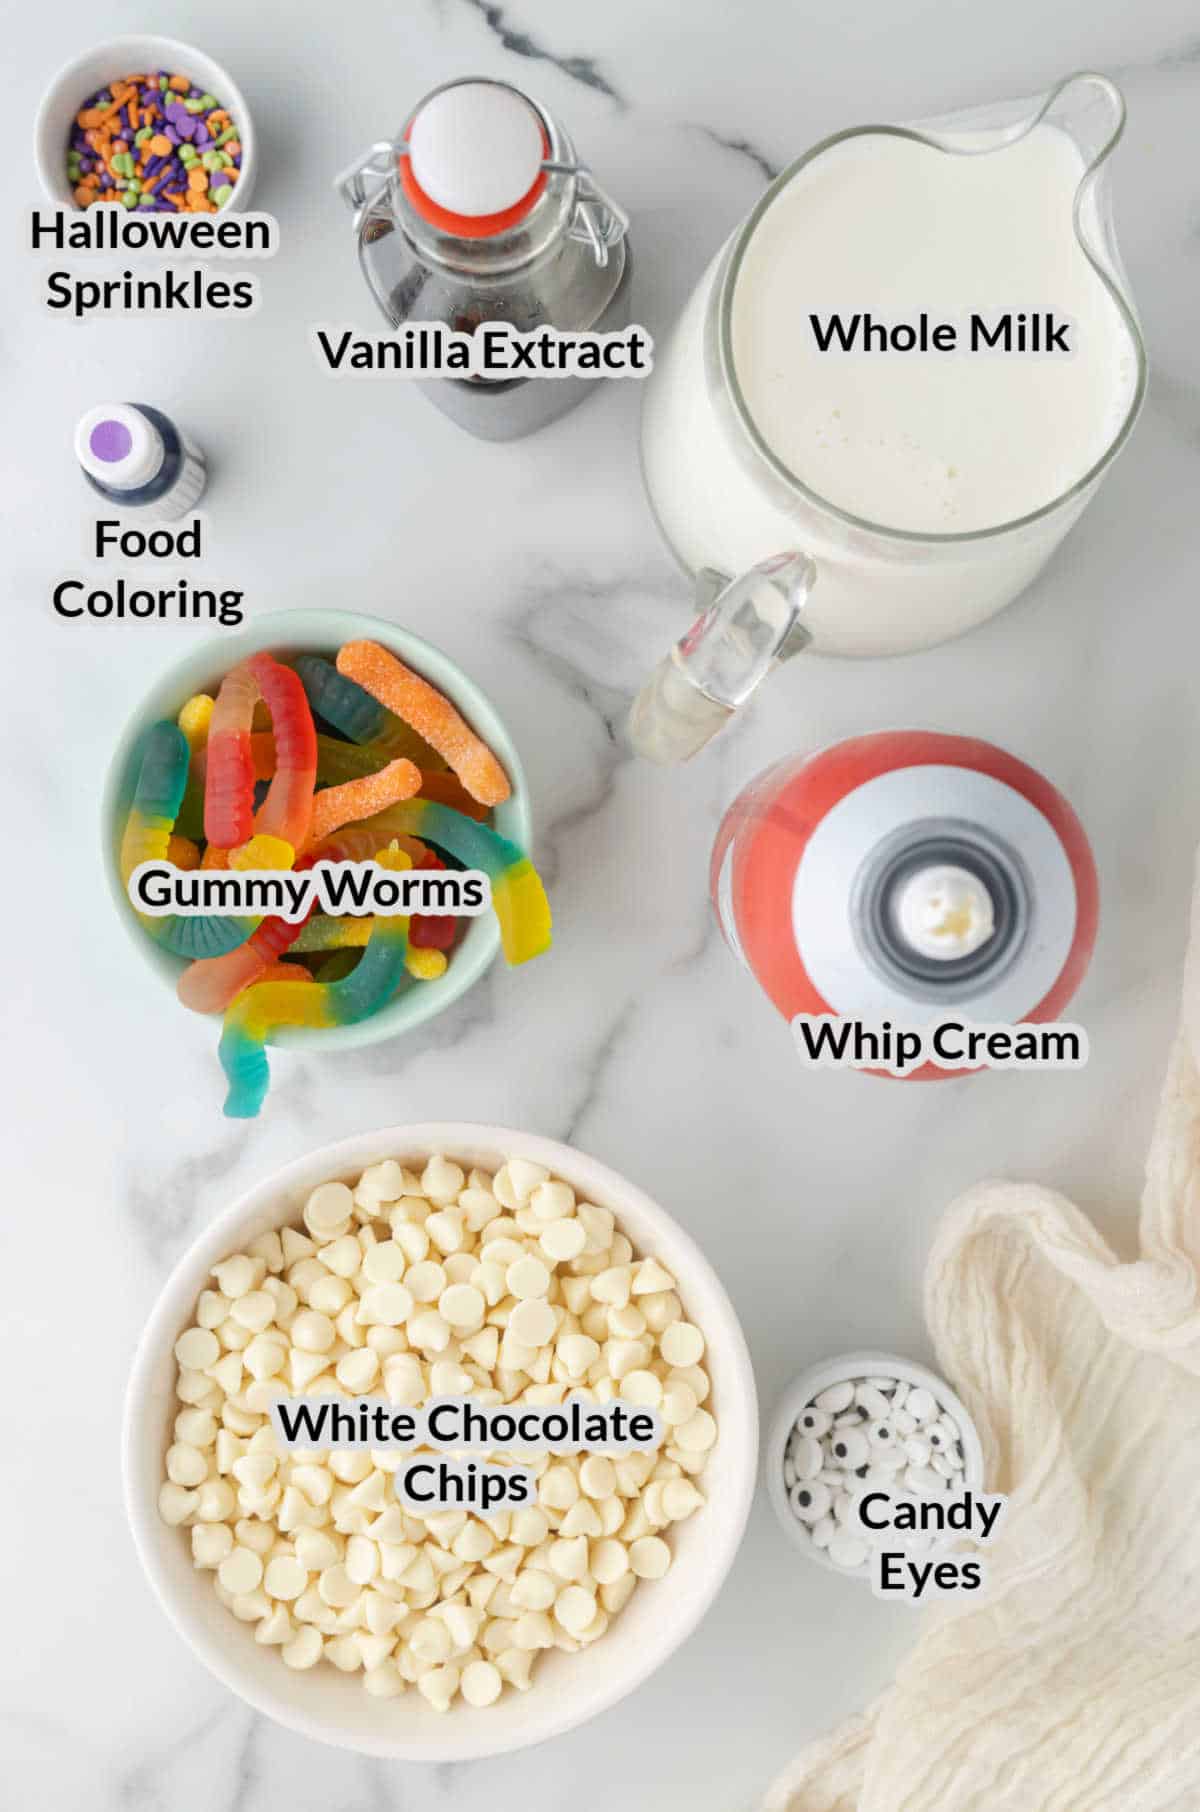 Overhead Image of the Halloween Hot Chocolate Ingredients